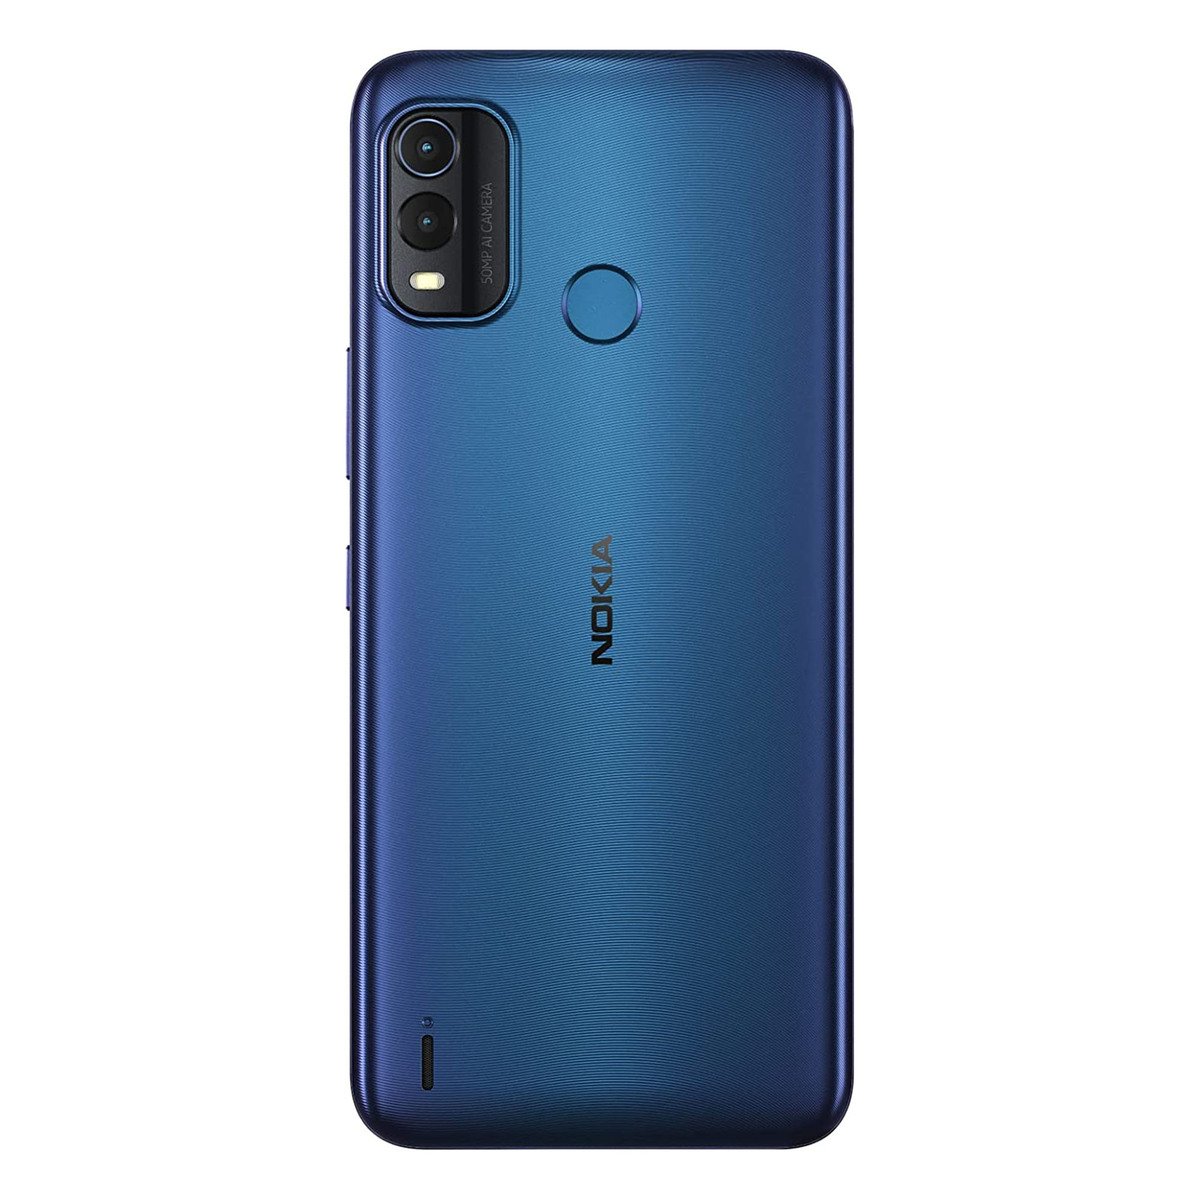 Nokia Mobile G11 Plus 3GB 64GB Blue